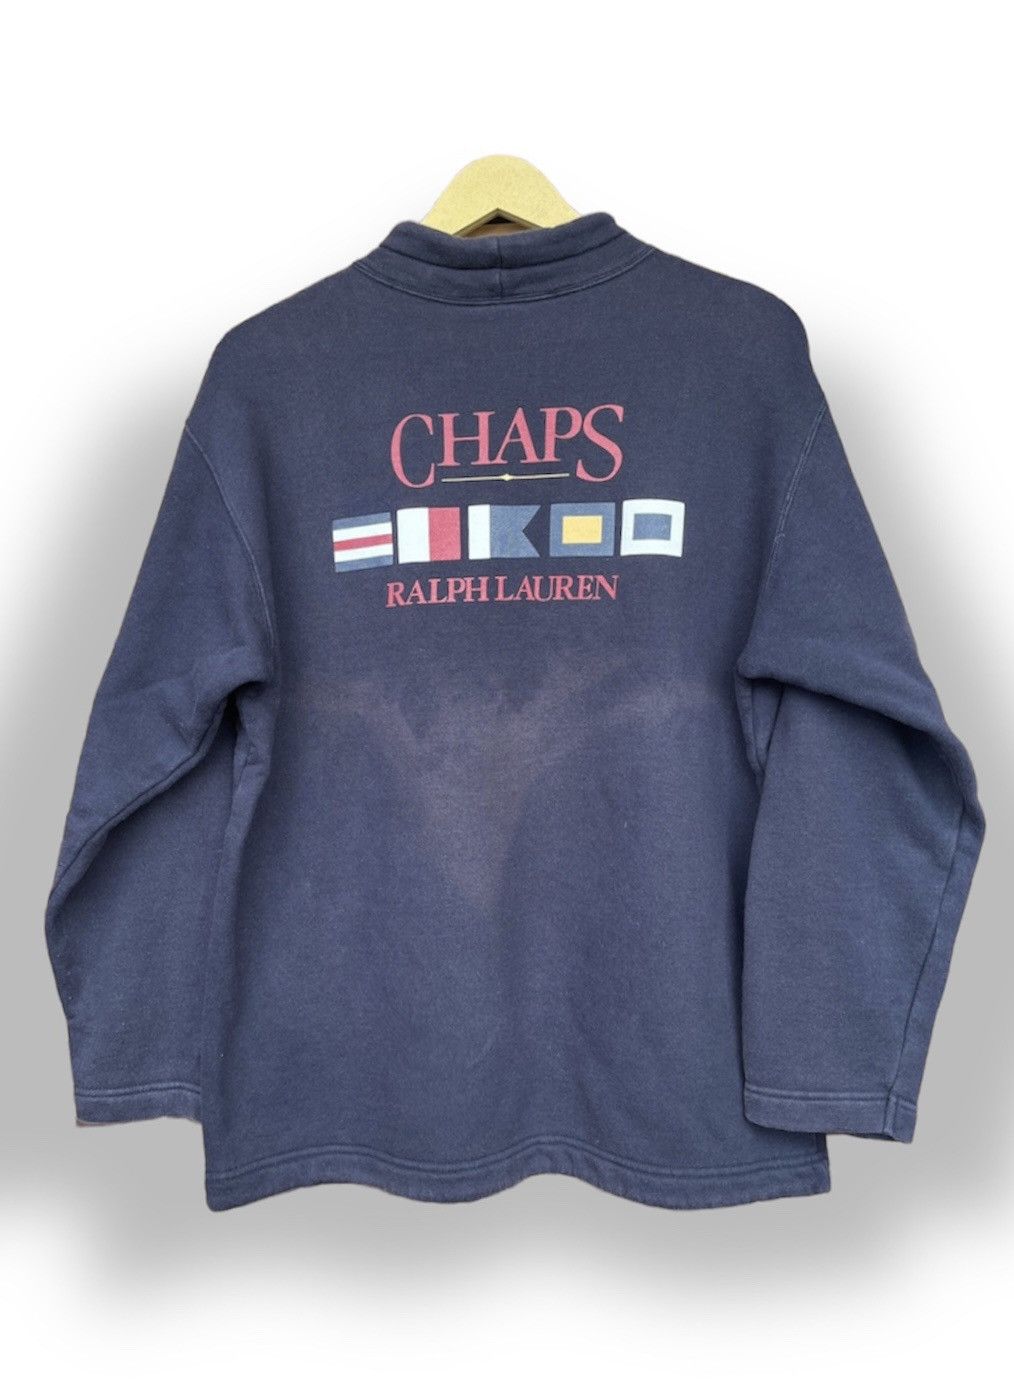 Vintage 90s Pullover Chaps Ralph Lauren Drawstring Sweater - 1